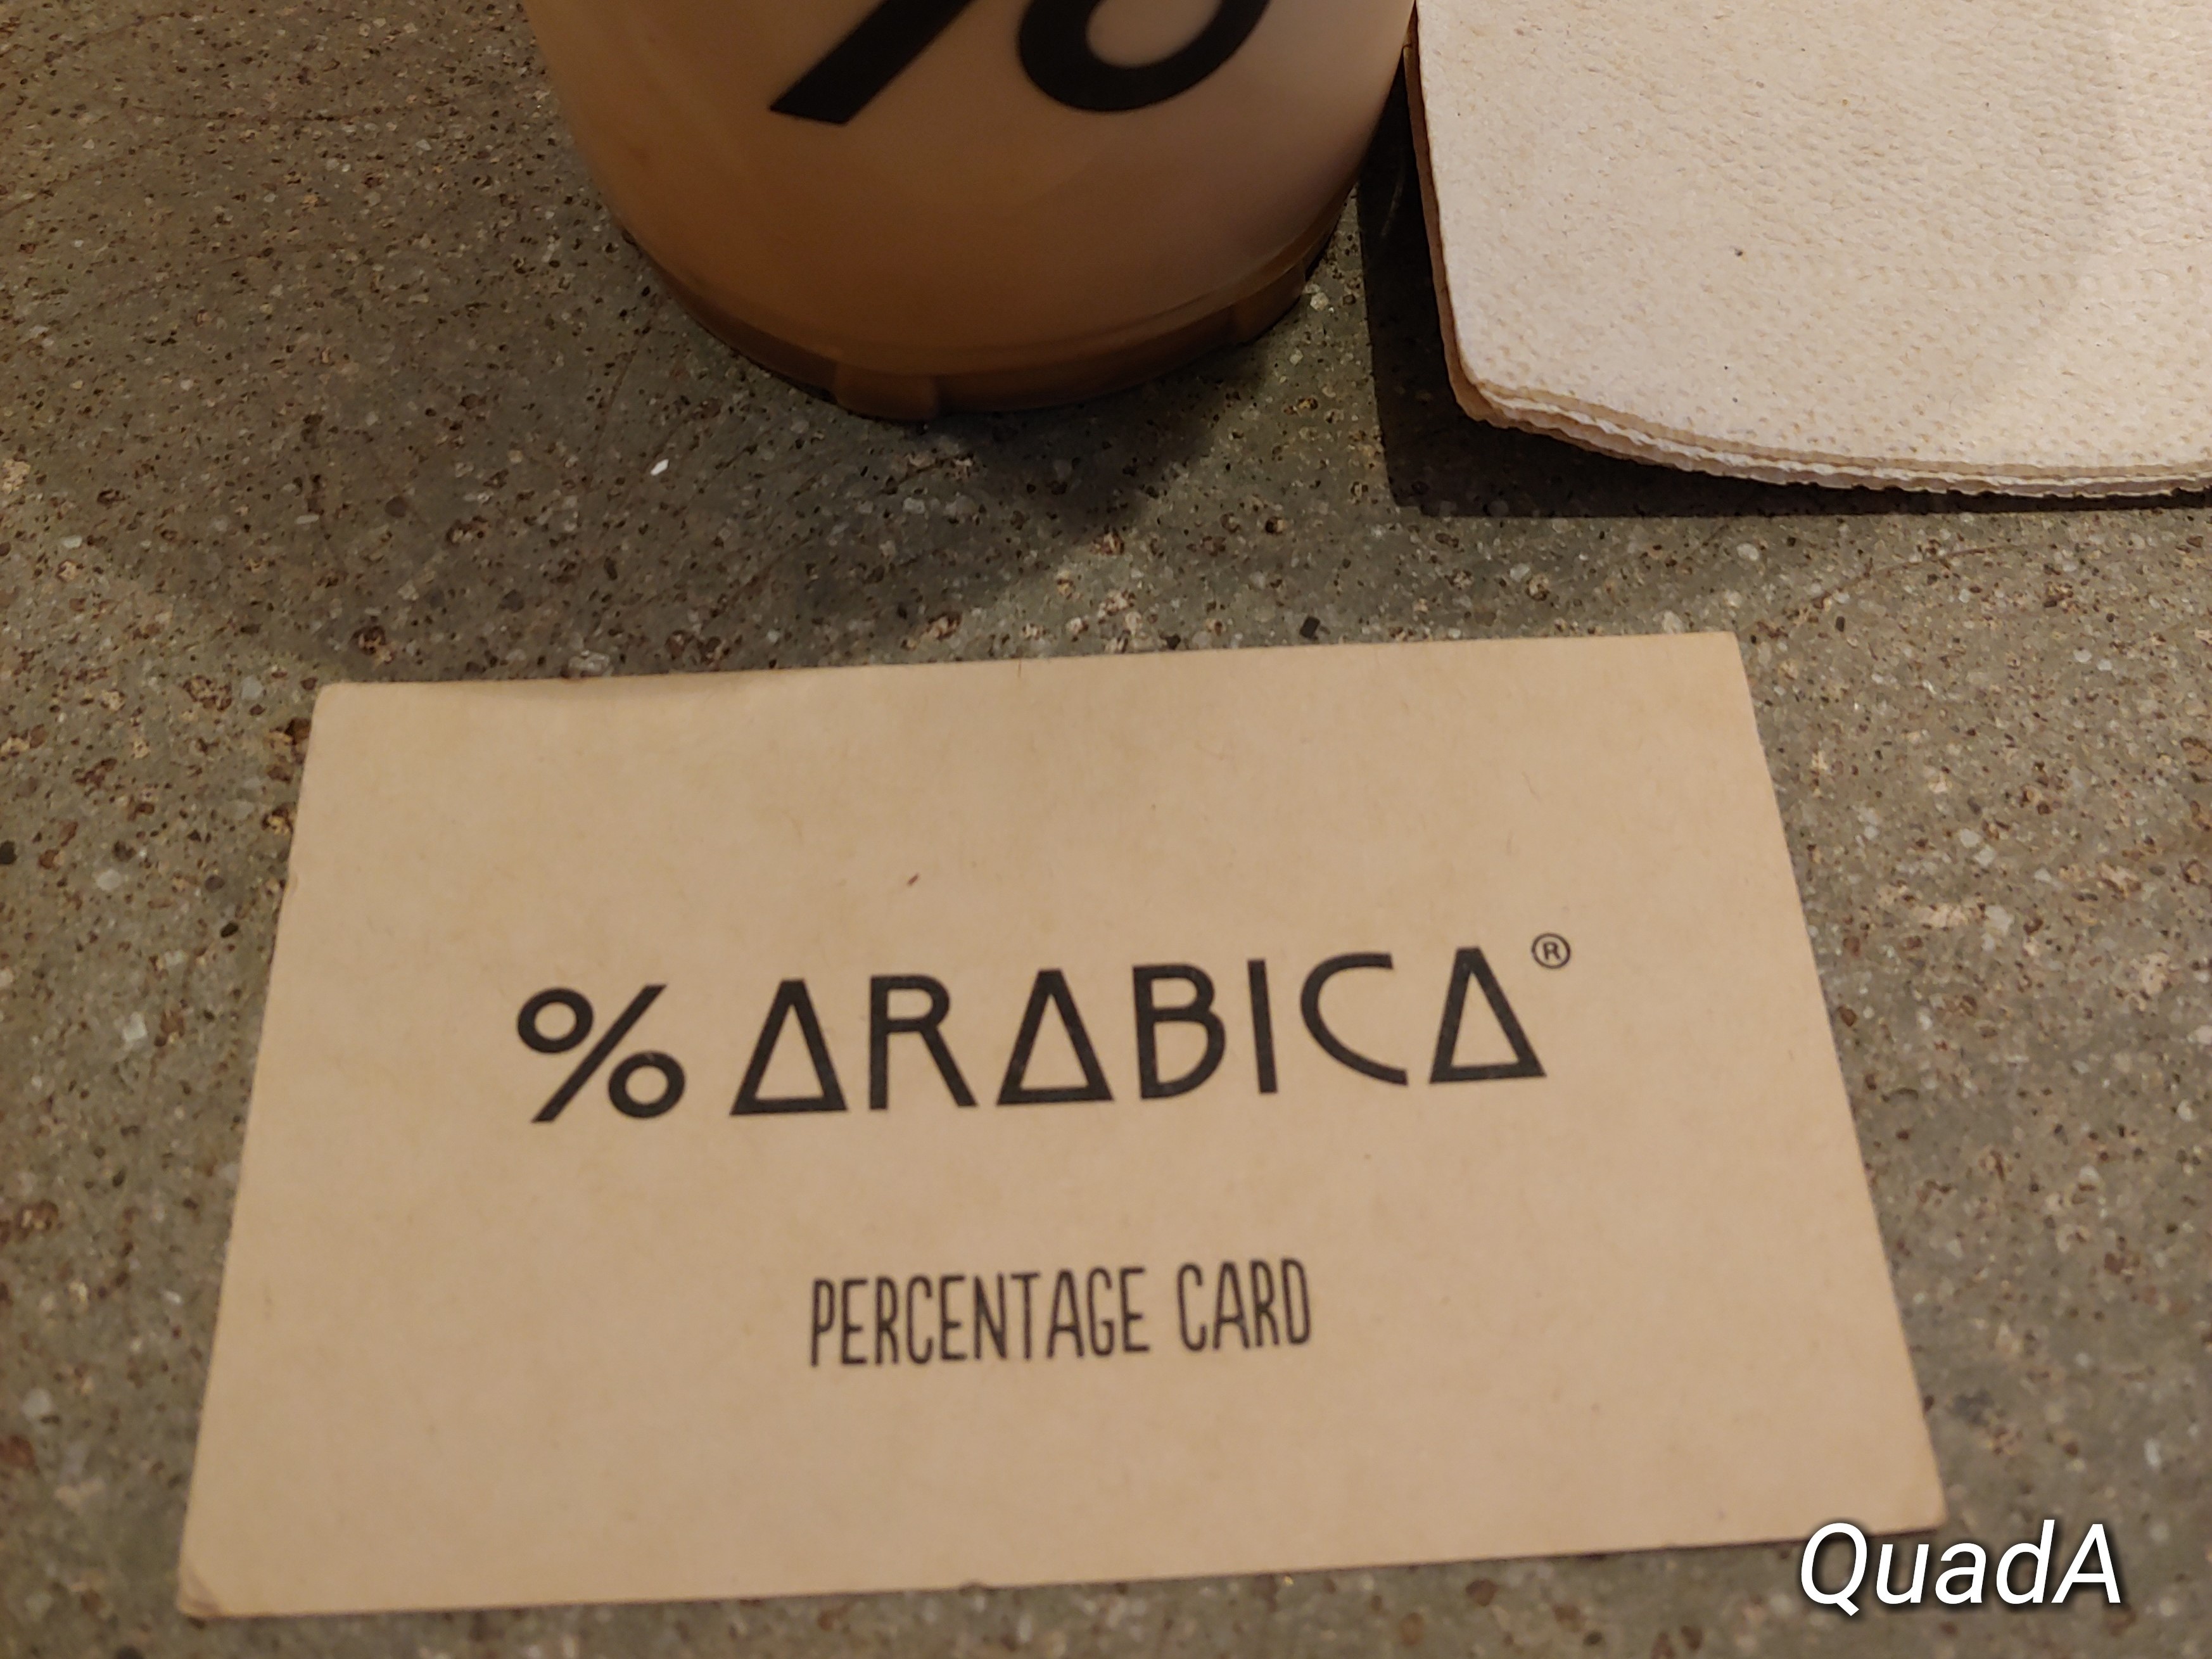 Arabica percentage card